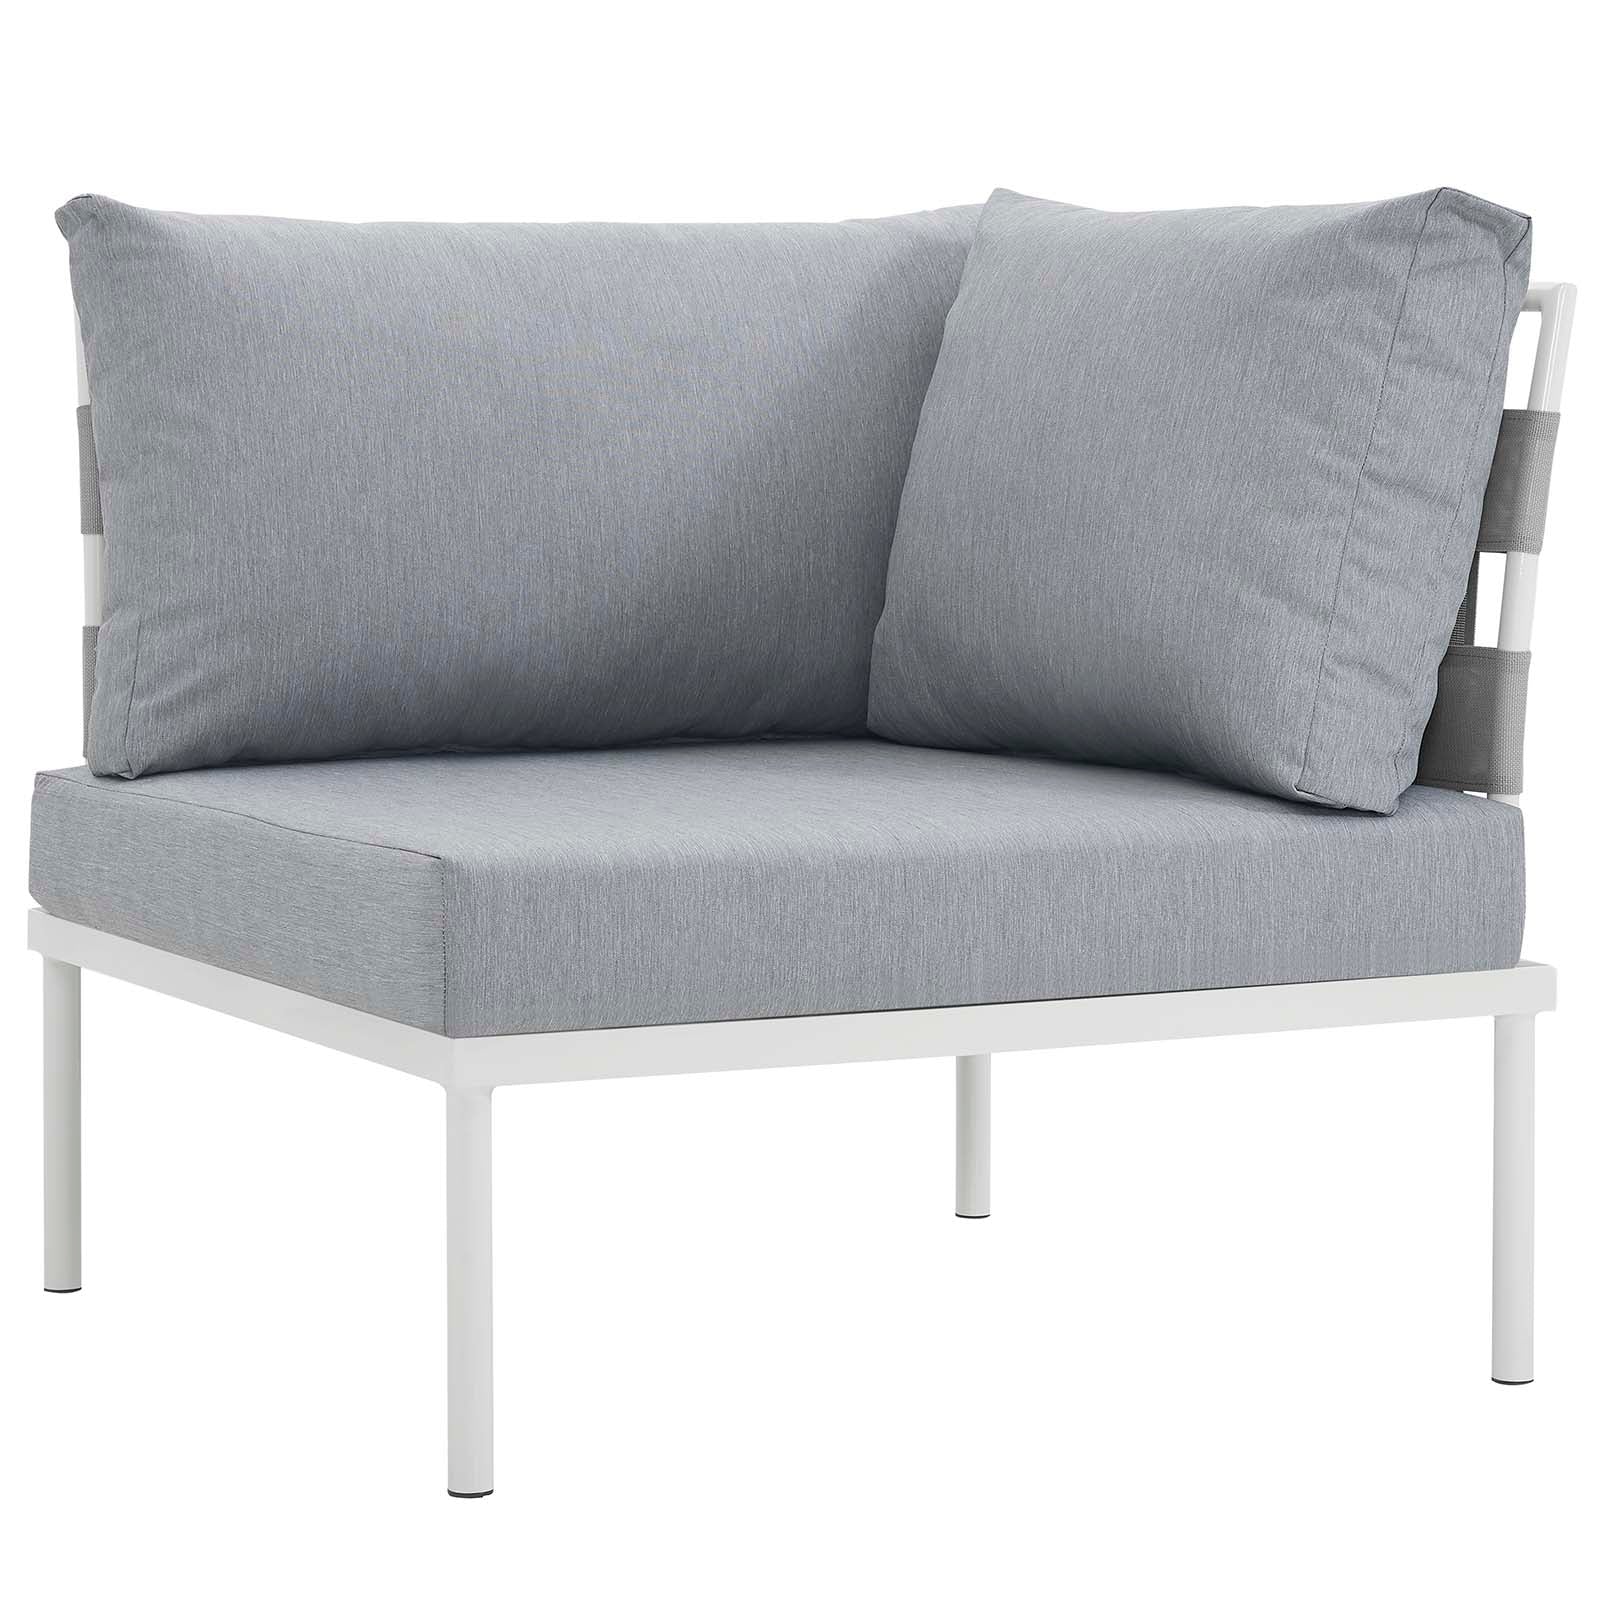 Modway Outdoor Conversation Sets - Harmony 10 Piece Outdoor Patio Aluminum Sectional Sofa Set White Gray